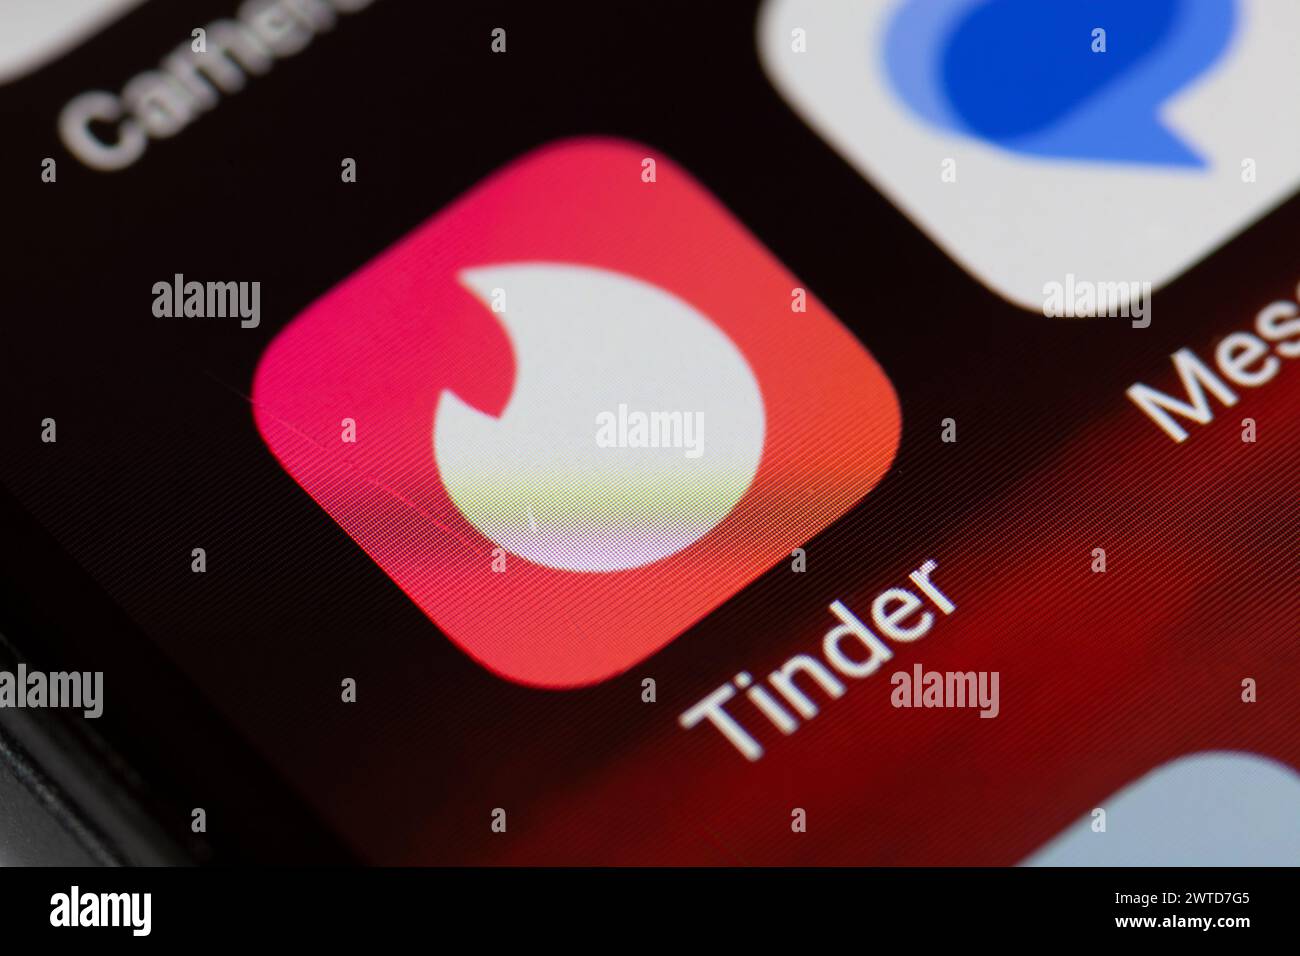 Tinder app icon on mobile phone Stock Photo